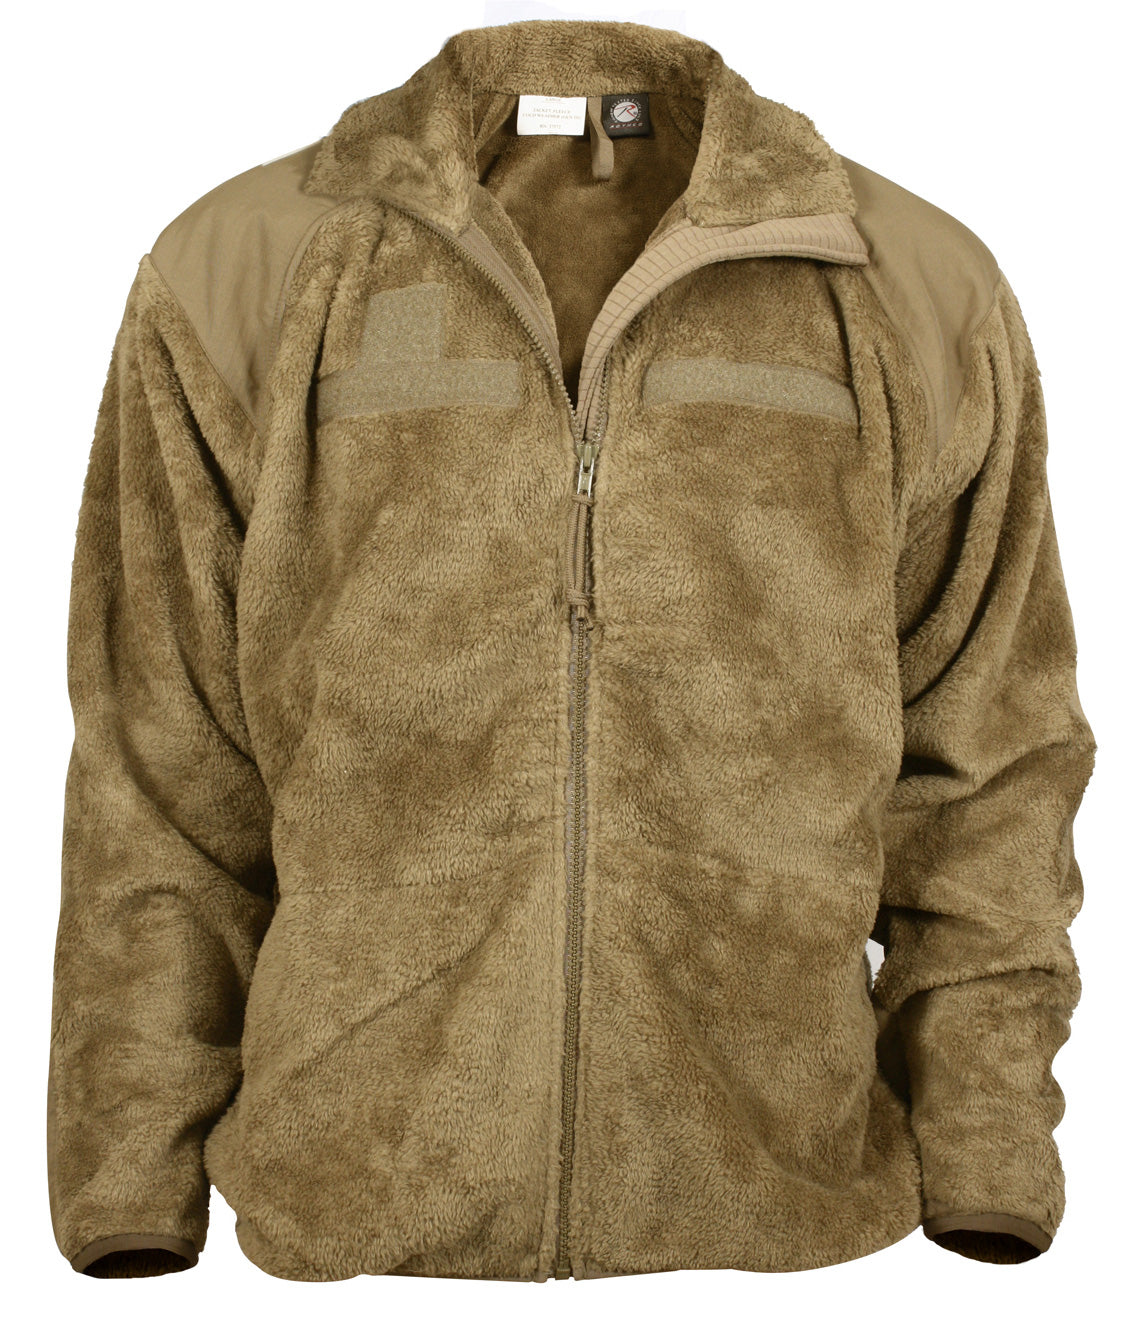 Milspec Generation III Level 3 ECWCS Fleece Jacket Gifts For Him MilTac Tactical Military Outdoor Gear Australia